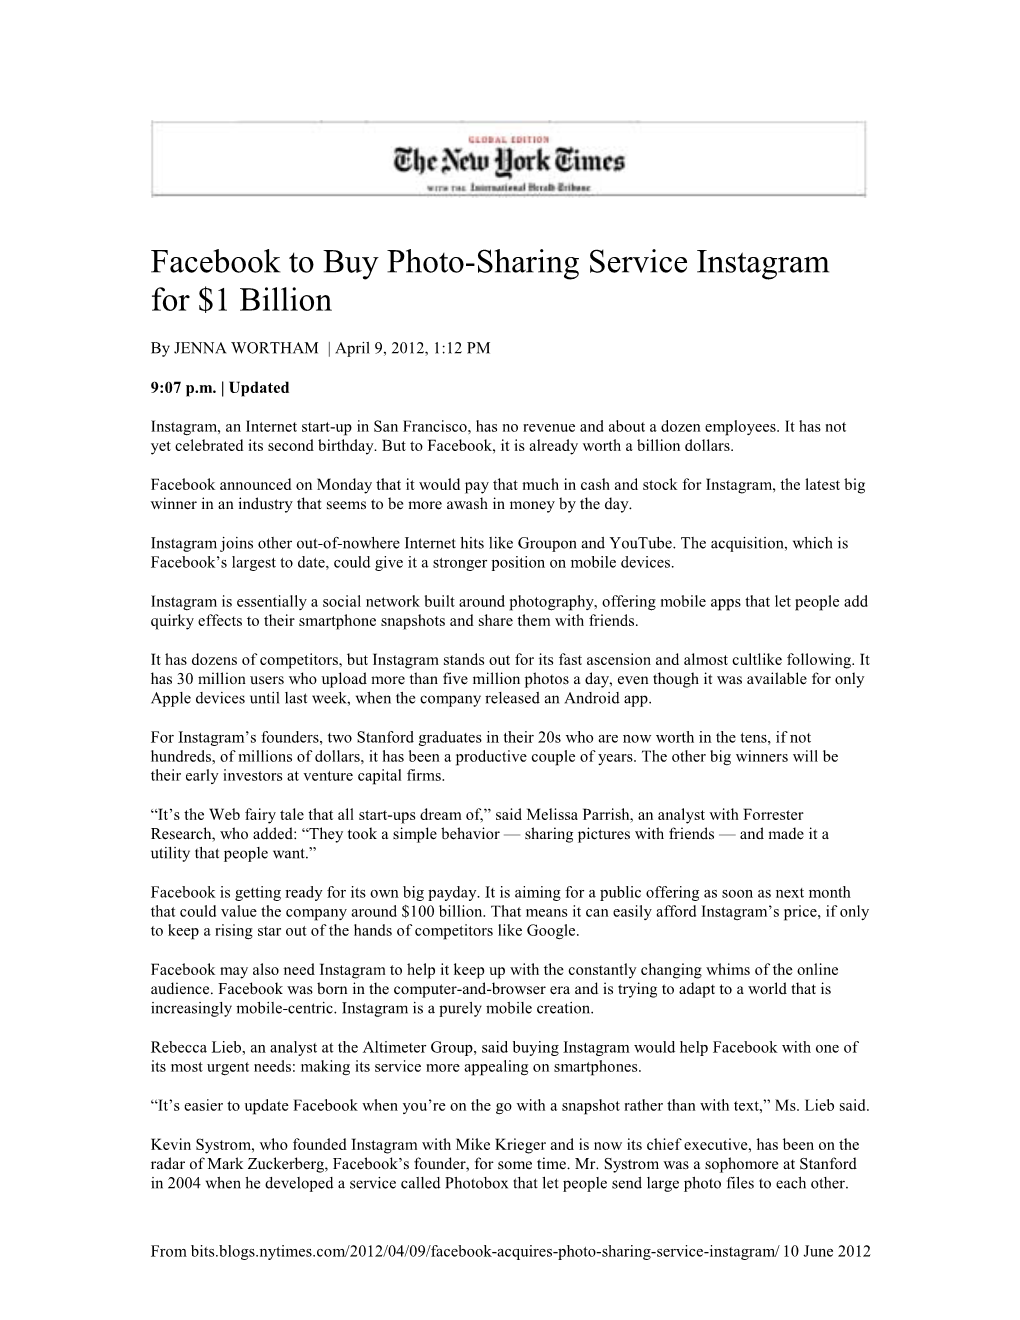 Facebook to Buy Photo-Sharing Service Instagram for $1 Billion